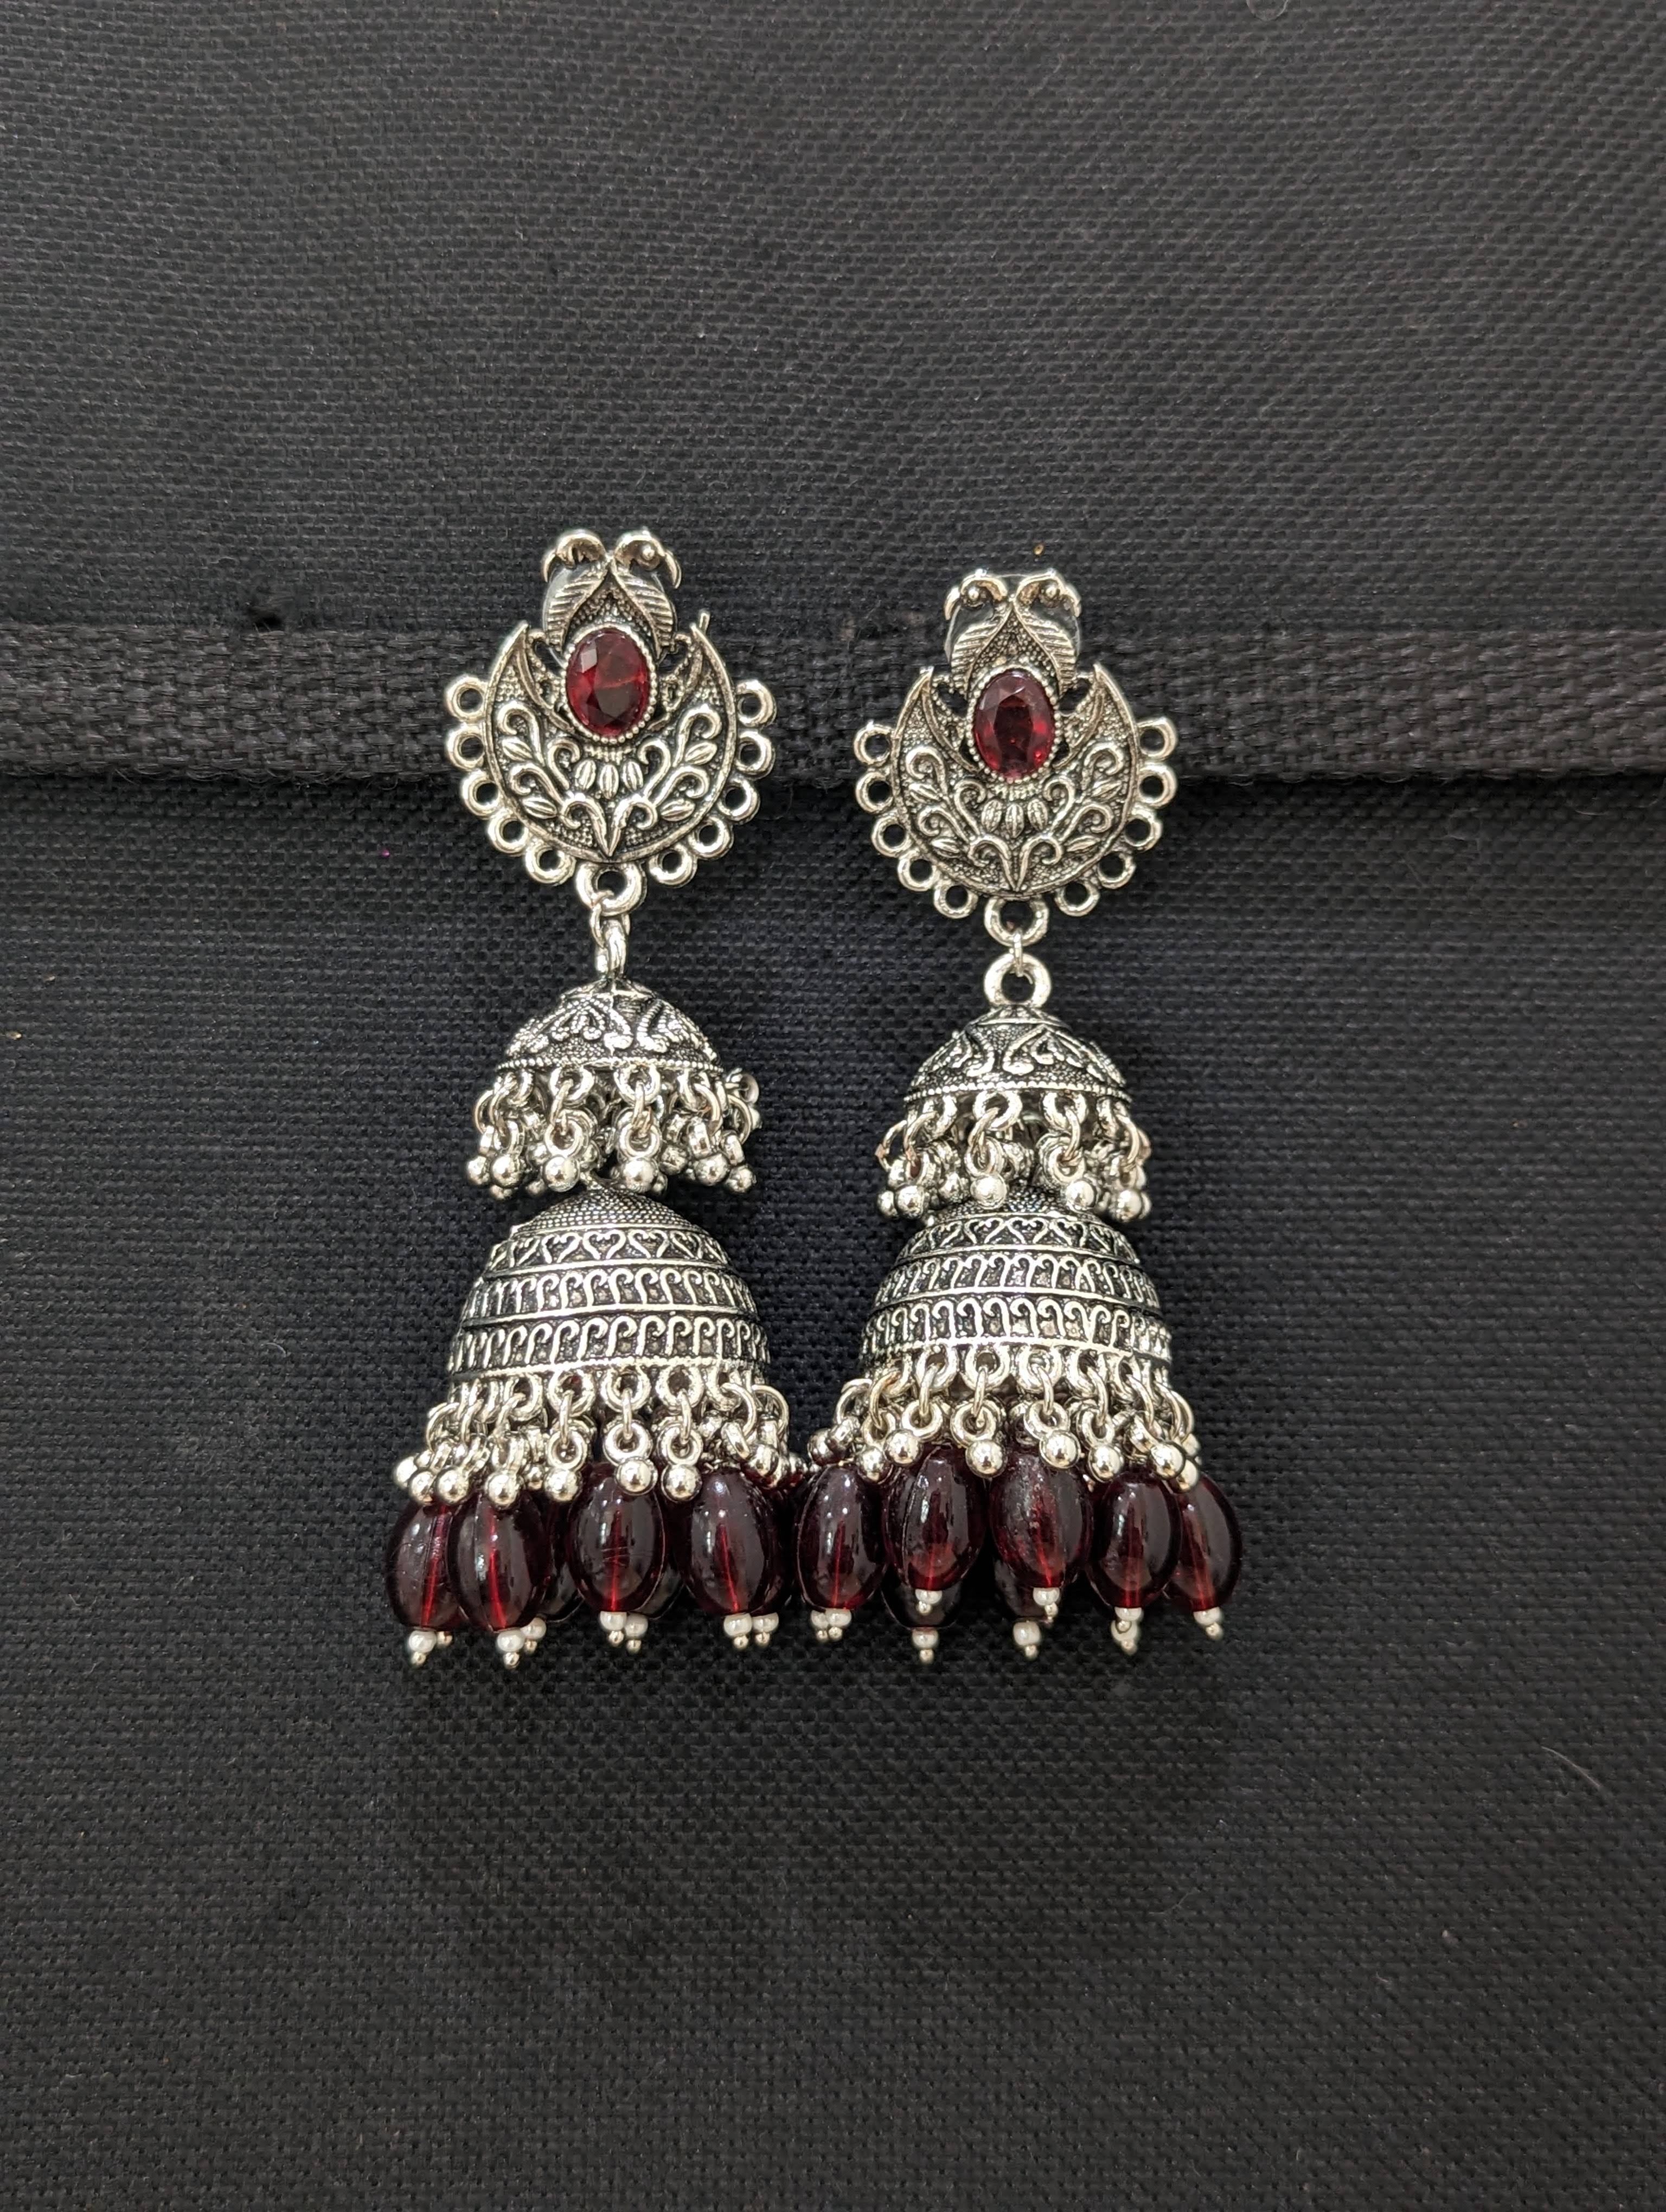 Buy Oxidised Earrings Online at Best Prices in India | Myntra